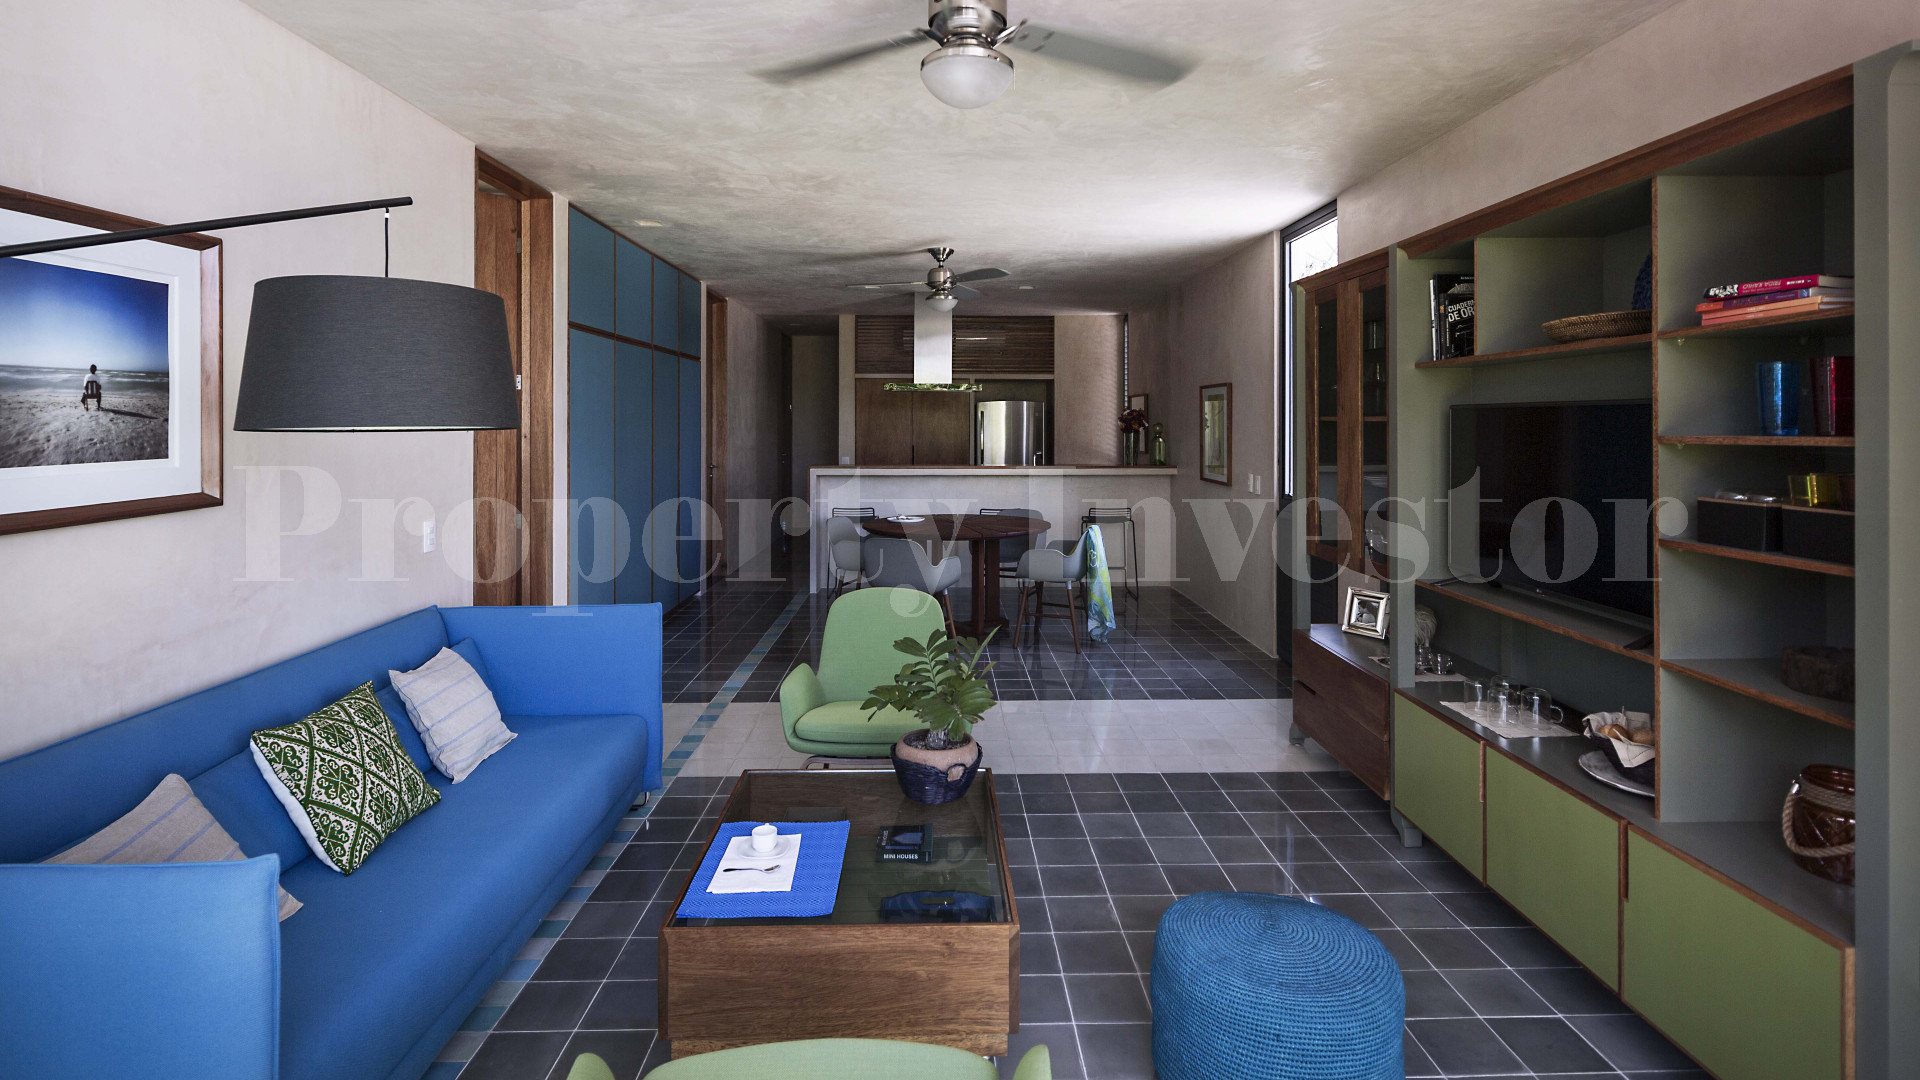 1 Bedroom Boutique Apartment in Playa Del Carmen (Unit 504)